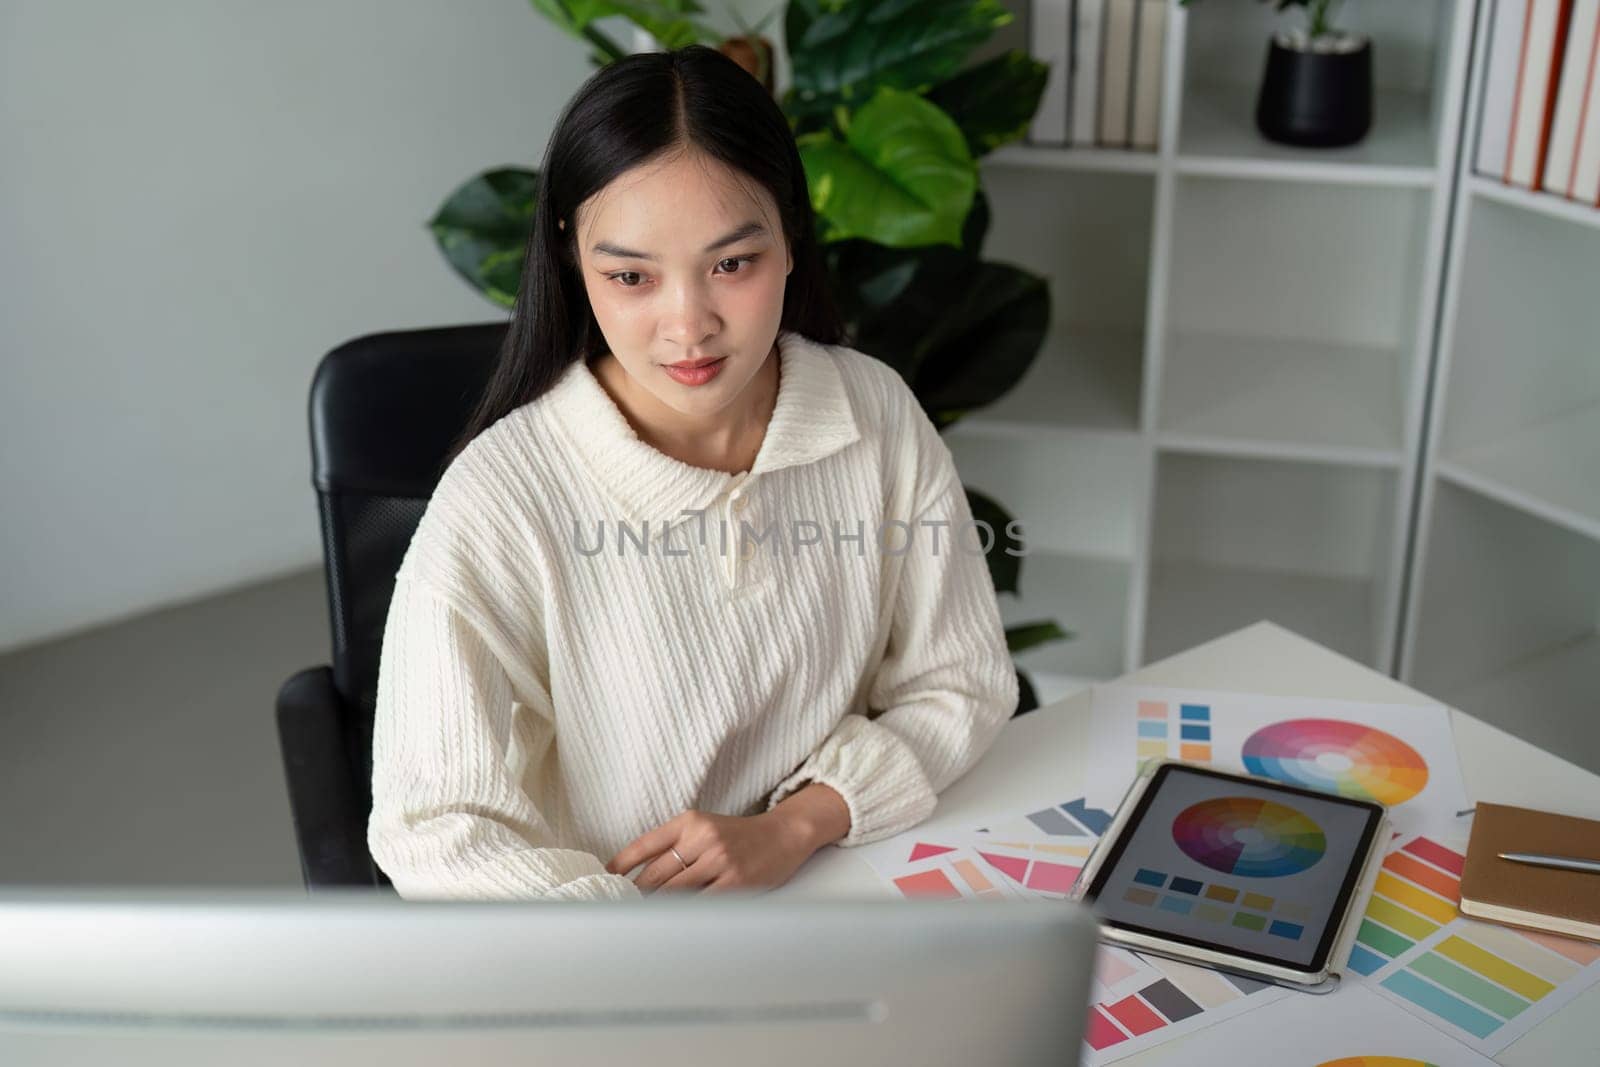 Asian woman graphic designer working in home office. Artist creative designer illustrator graphic skill concept.